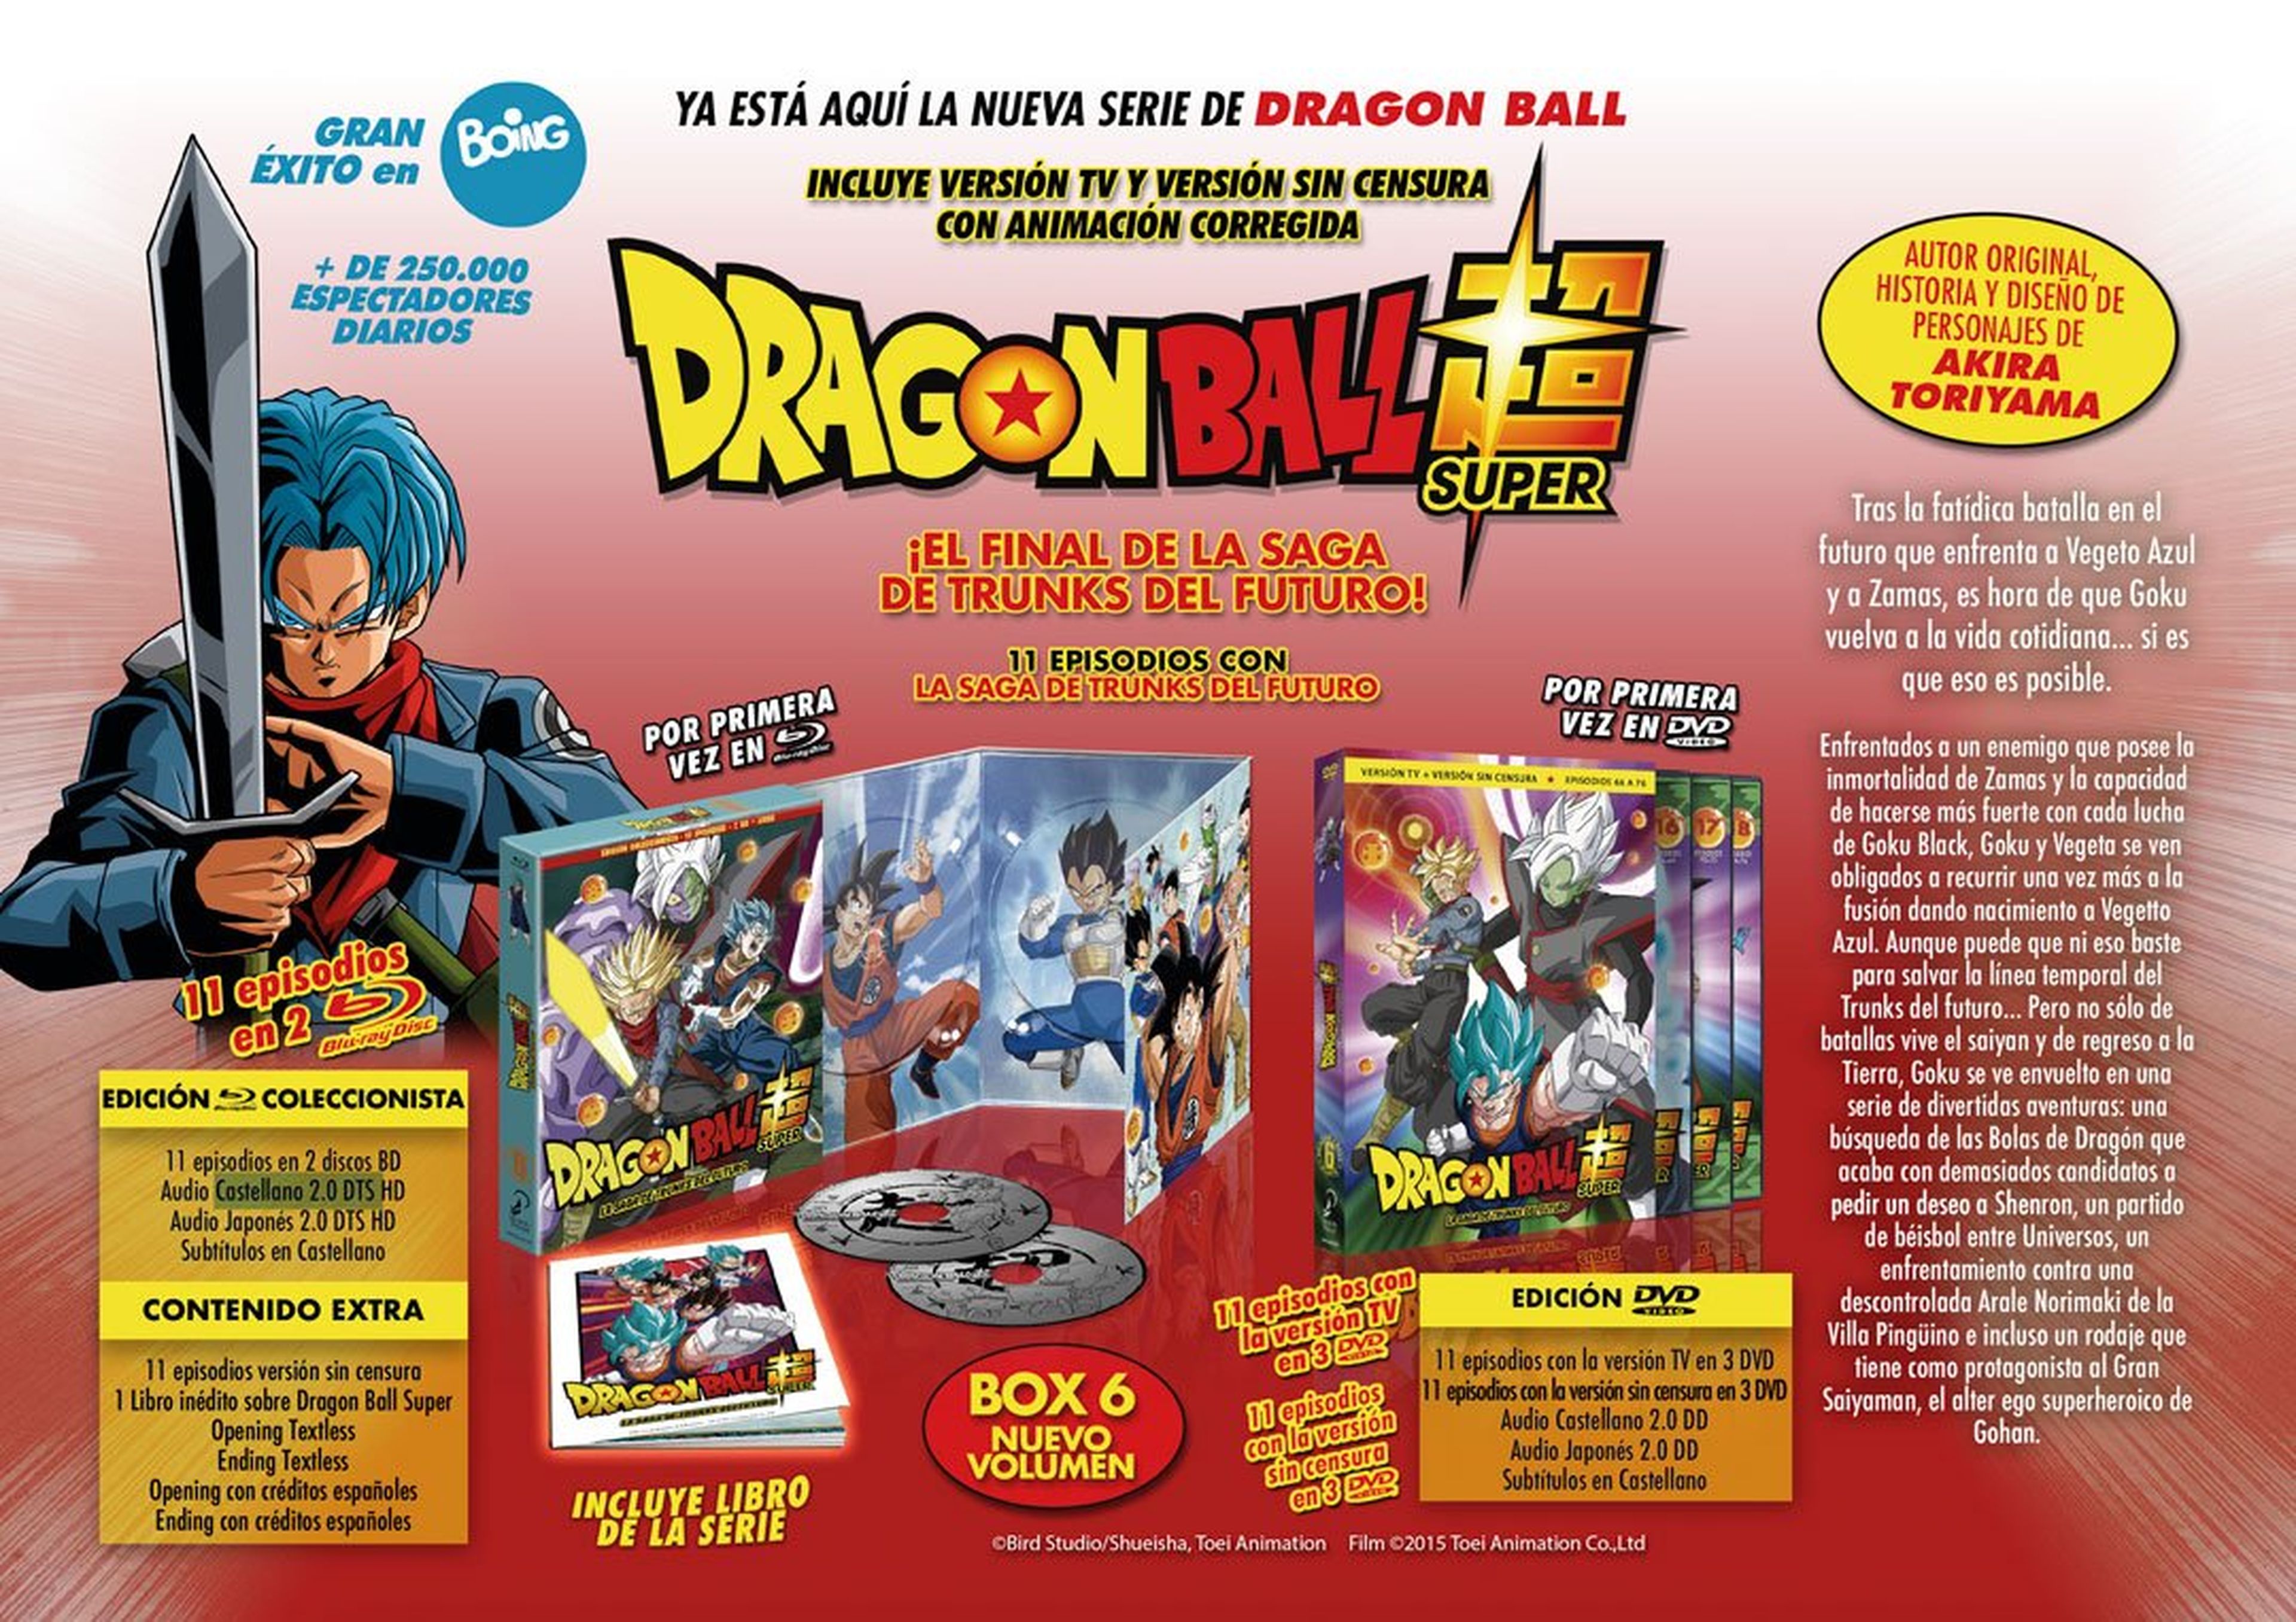 Dragon Ball Super en DVD y Blu-ray - Box 6